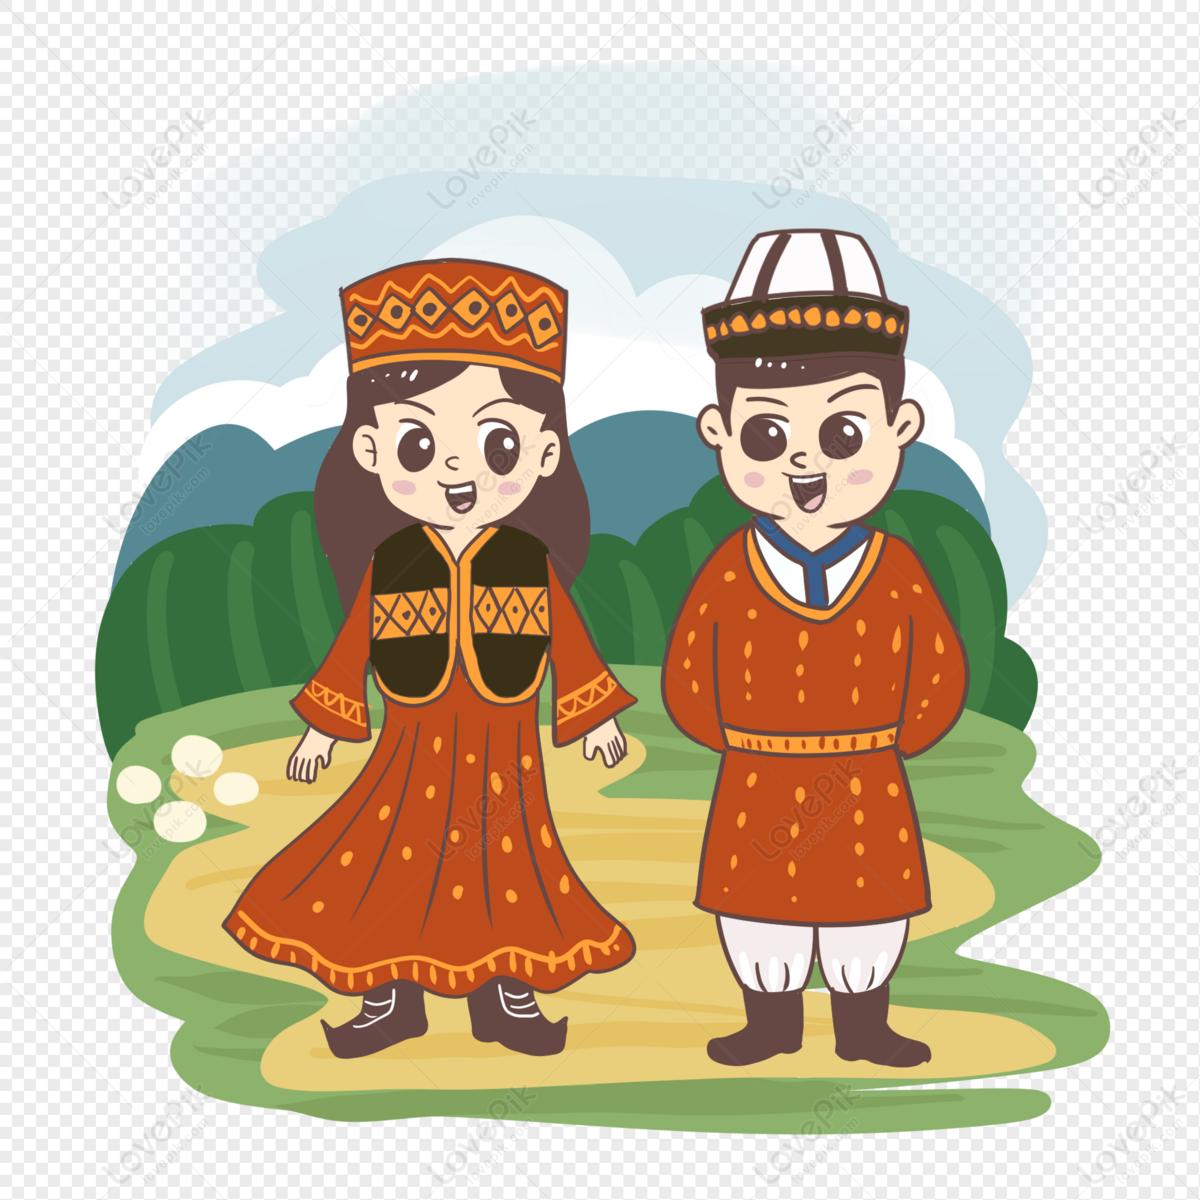 Kazakh Pattern Images, HD Pictures For Free Vectors Download - Lovepik.com